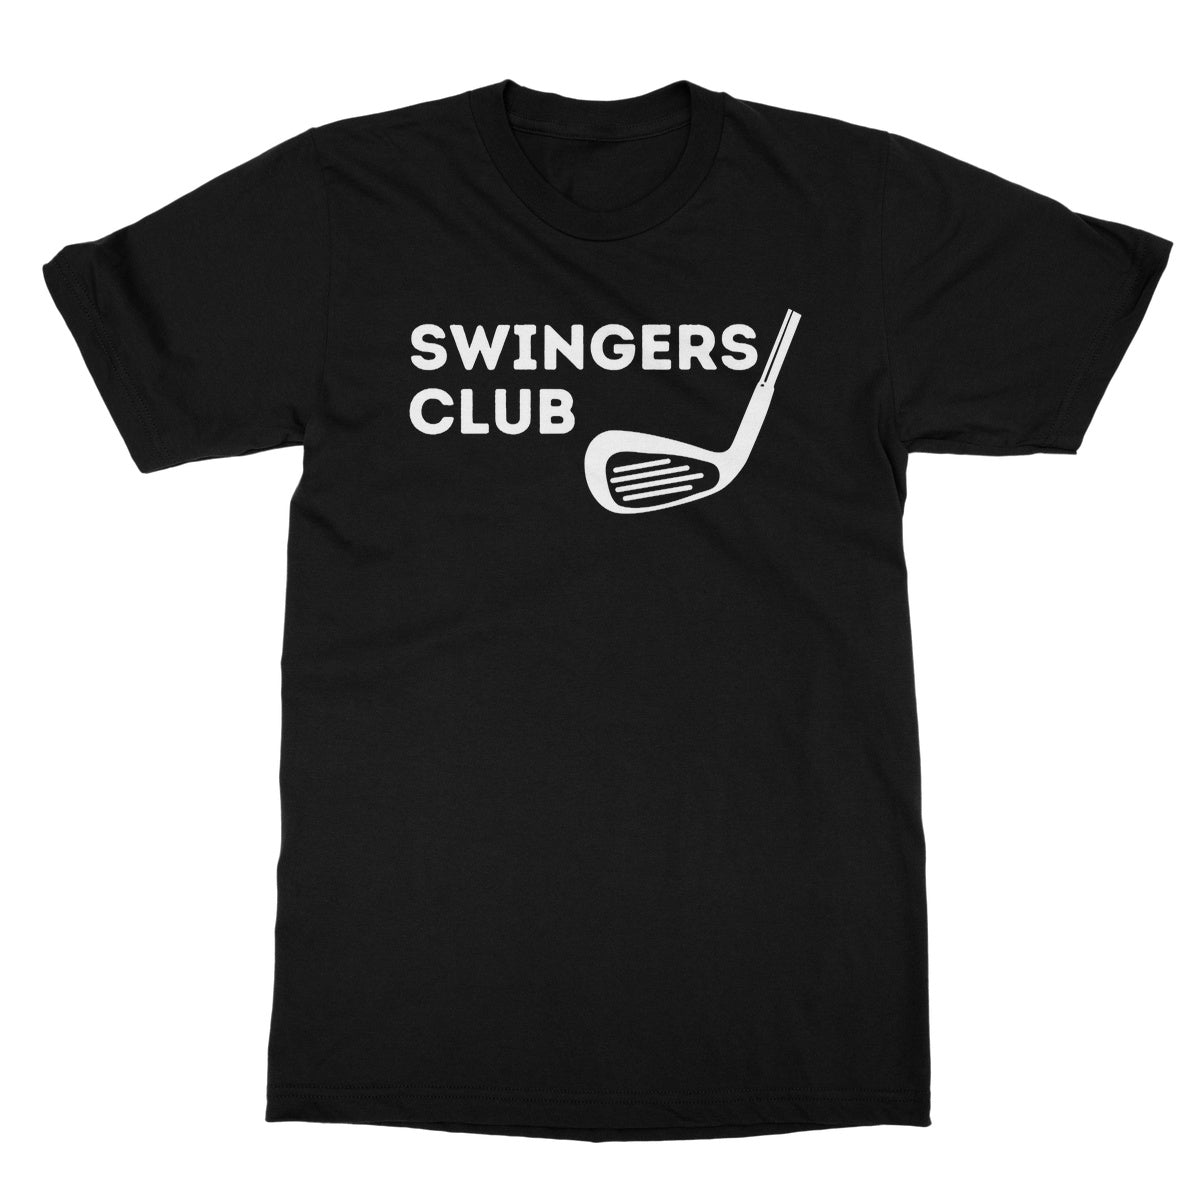 swingers club t shirt black